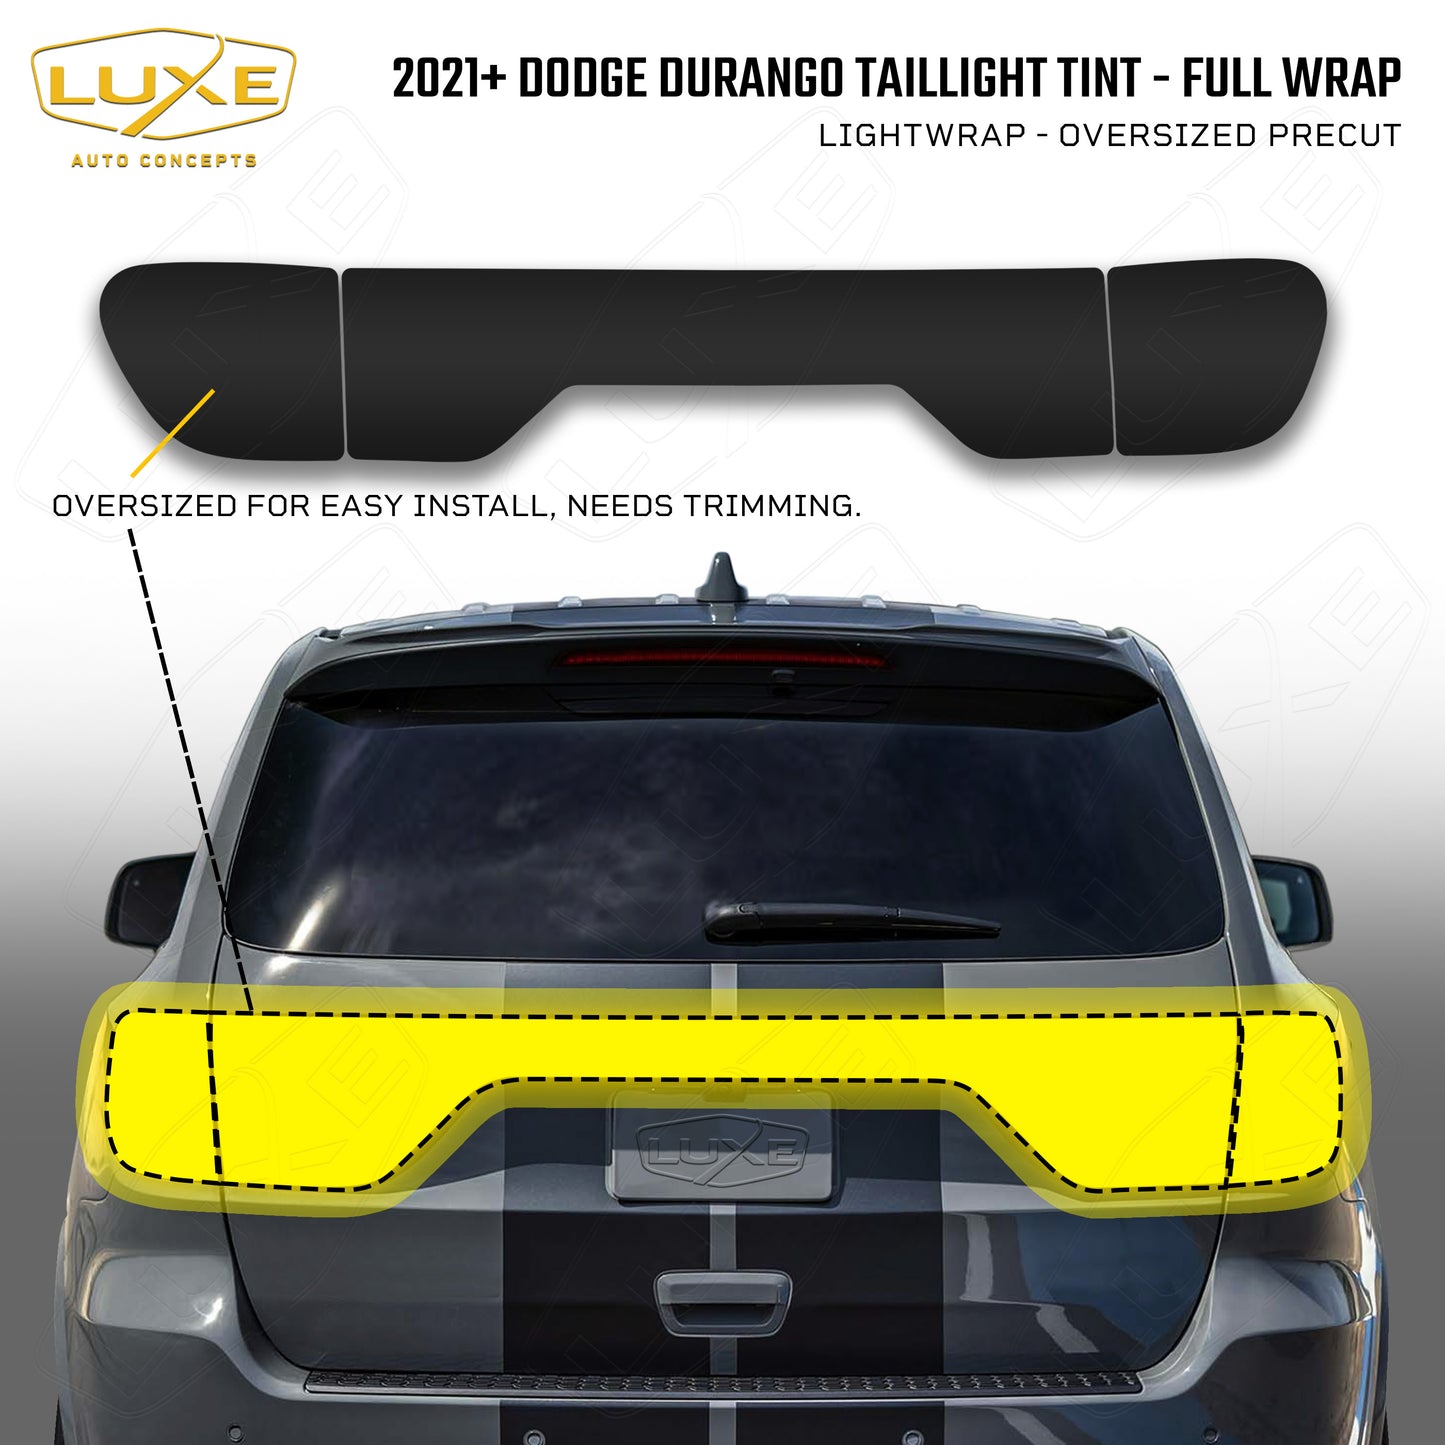 2014+ Durango Taillight Tint - Full Wrap